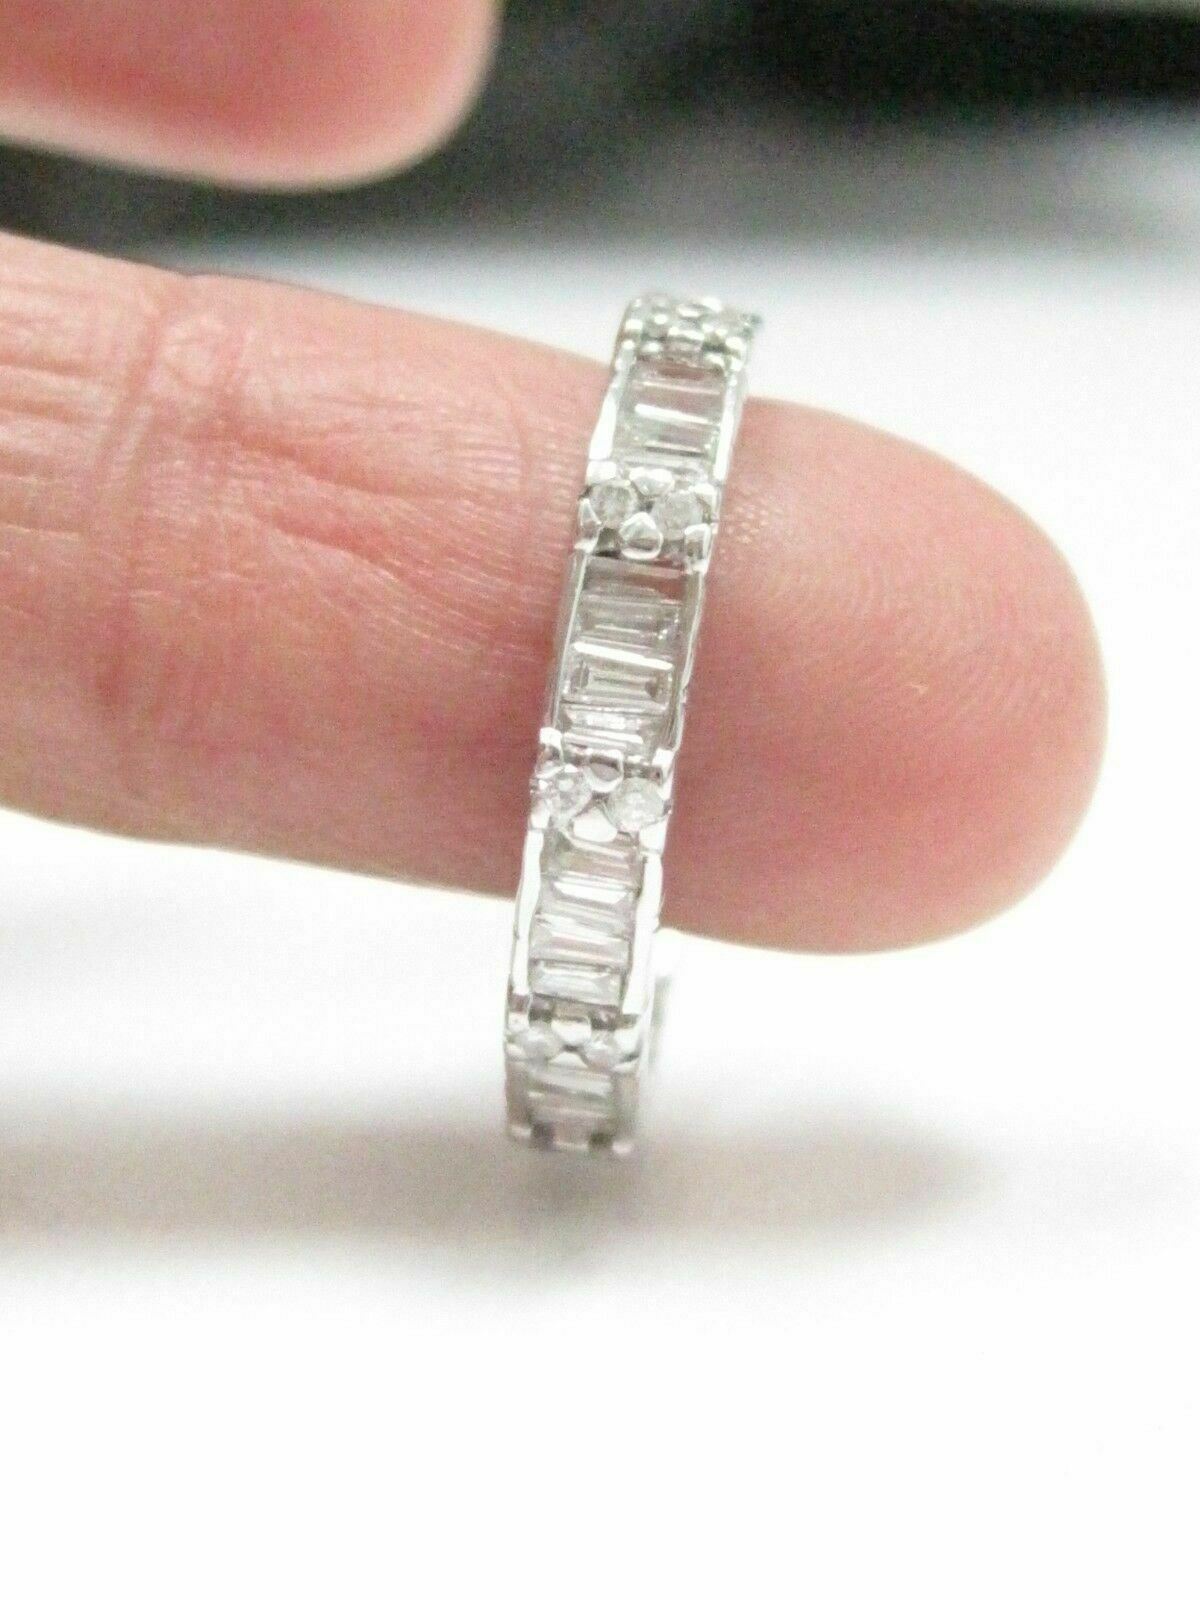 1.87 TCW Baguettes Cut Diamond Eternity Ring/Band G SI-1 Size 4.5 14k WG